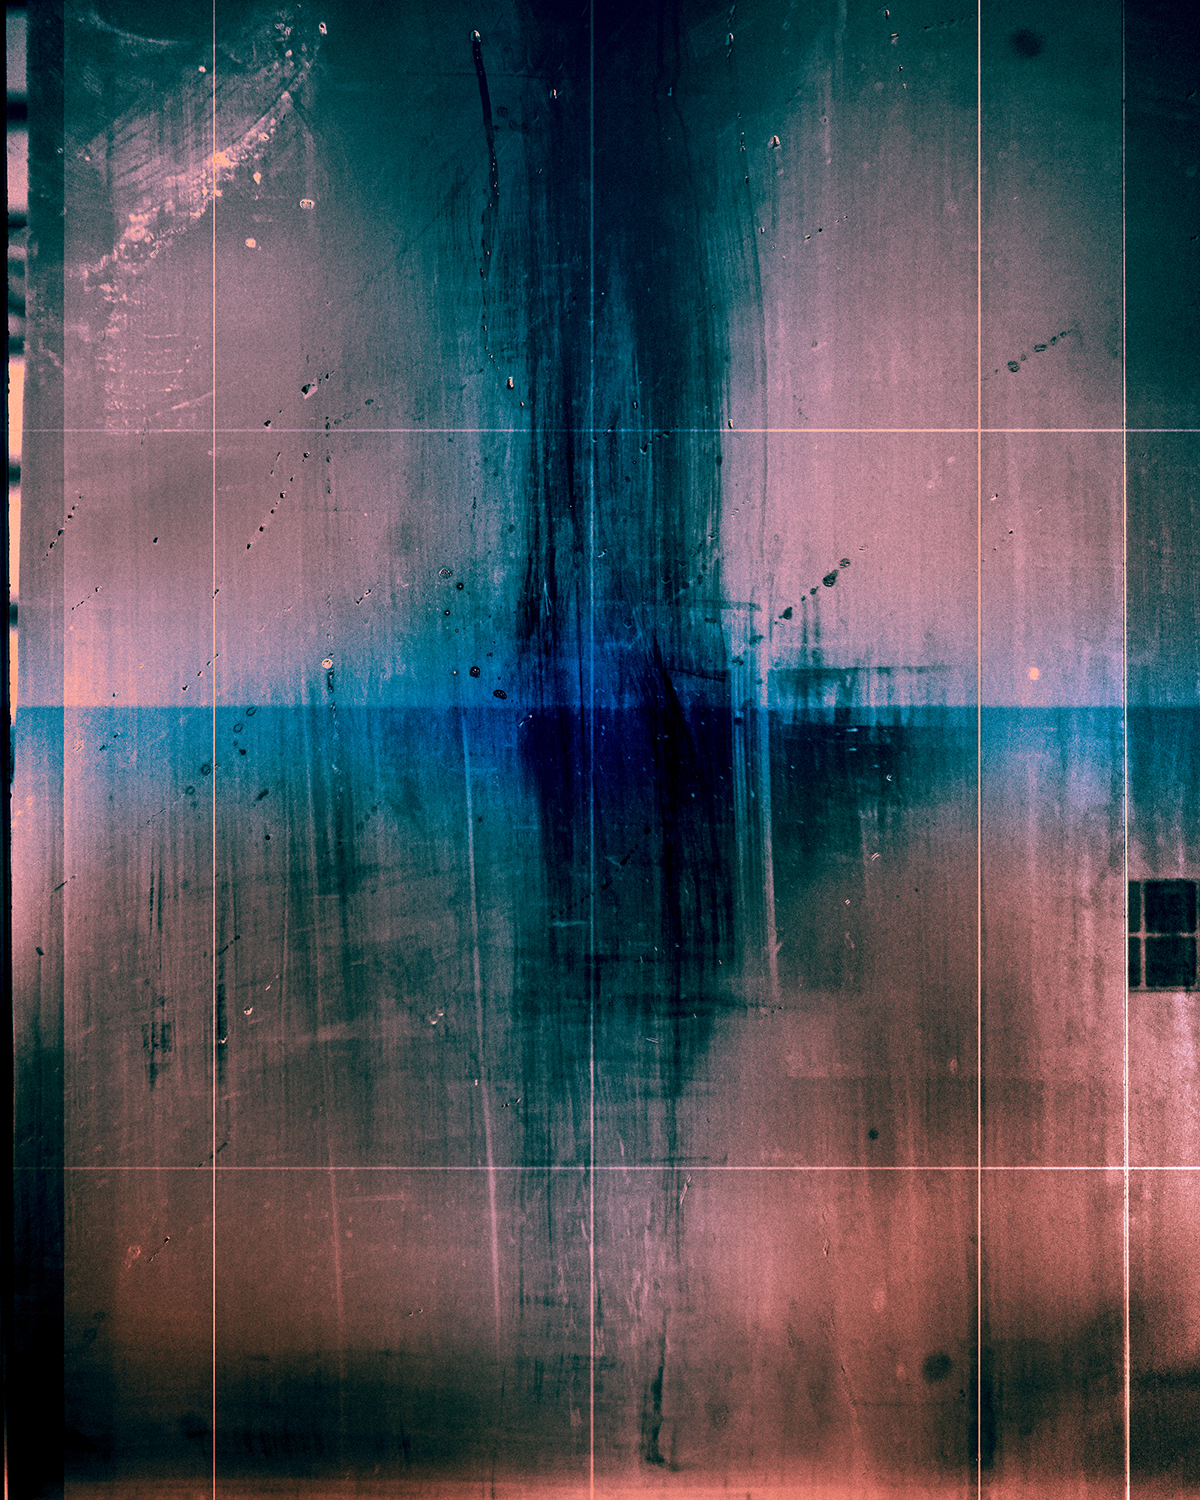 Joris Graaf, Not Quite Tight 2, Digitally processed photograph, 2020